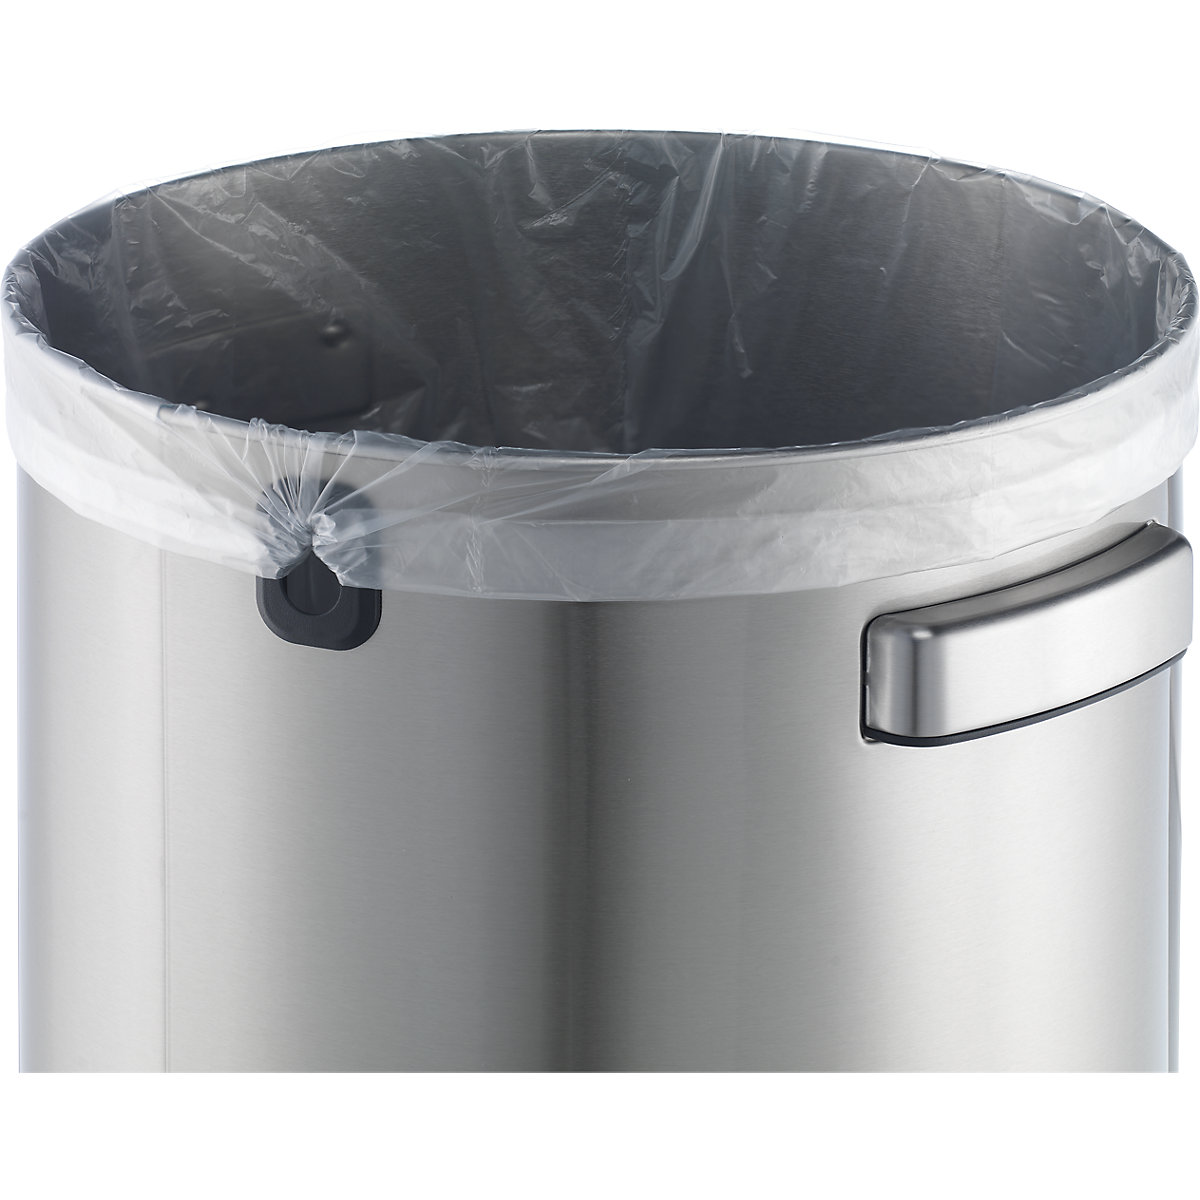 Dizajnerski spremnik za otpad velikog volumena – EKO (Prikaz proizvoda 2)-1